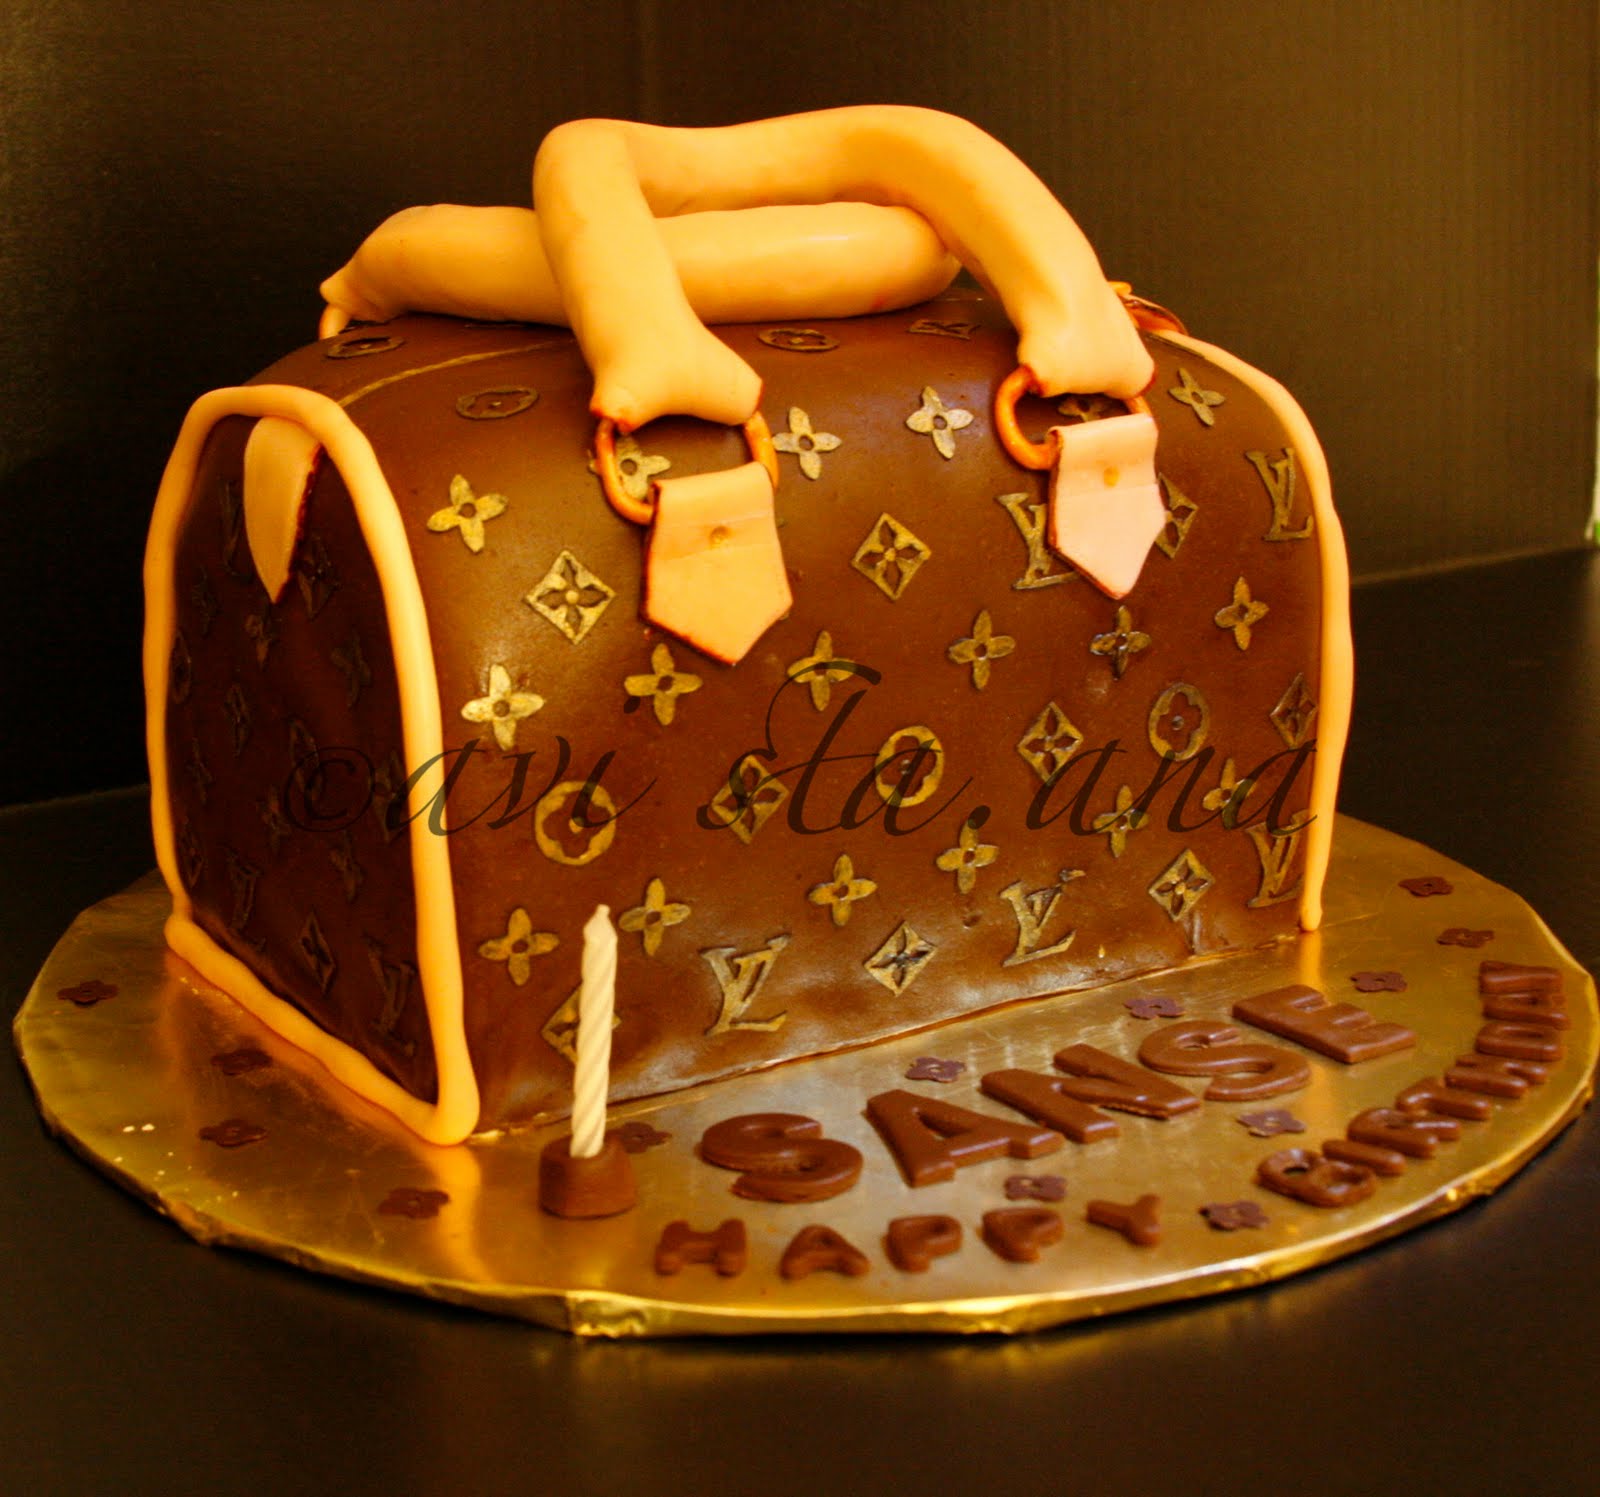 A Lot of Sugar: Louis Vuitton Choconilla Cake